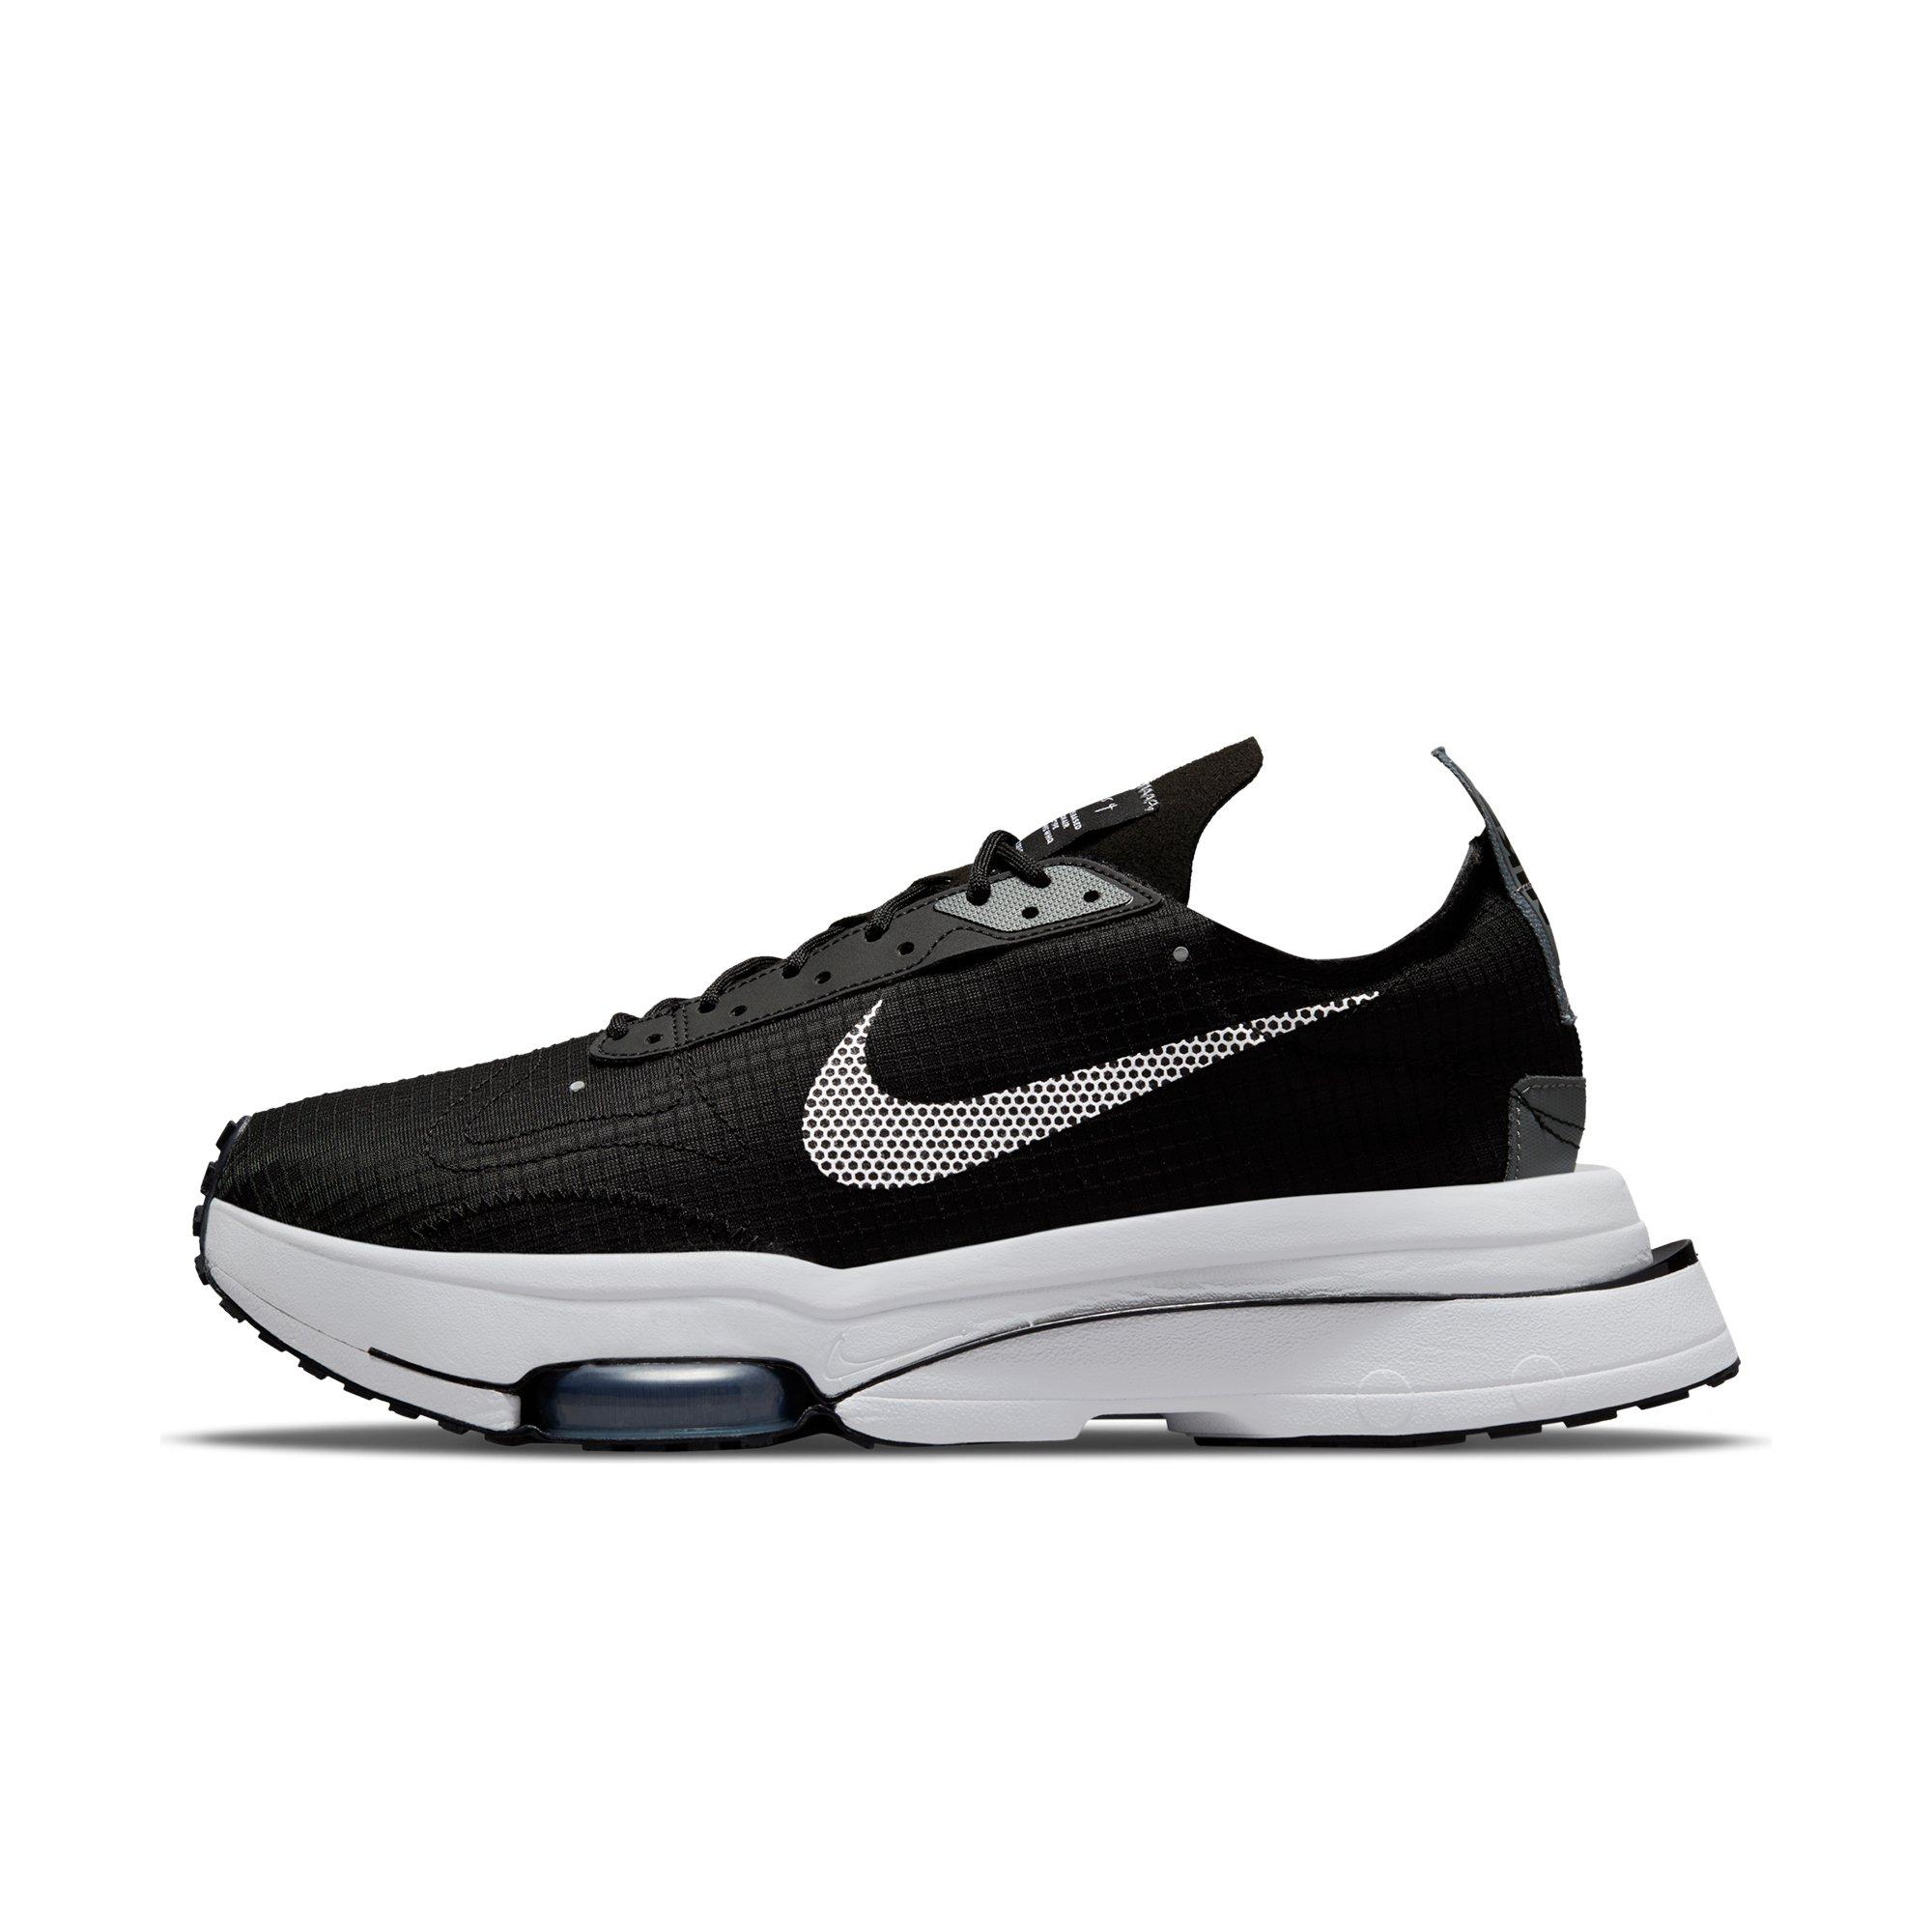 escape maniac Advance Nike Air Zoom-Type SE "Black/White" Men's Running Shoe